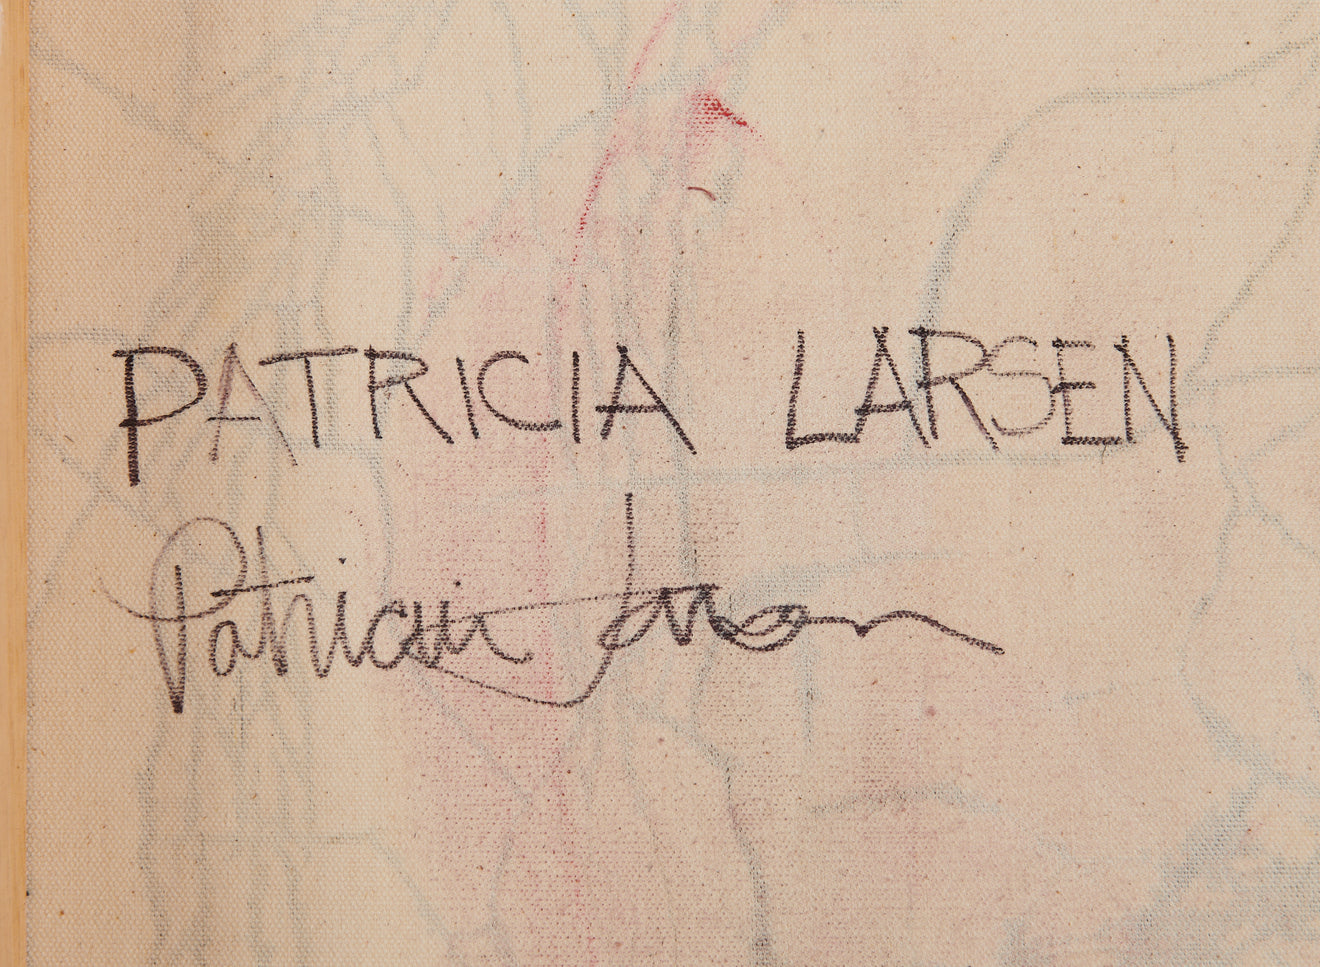 'NIGHT WALK' BY PATRICIA LARSEN